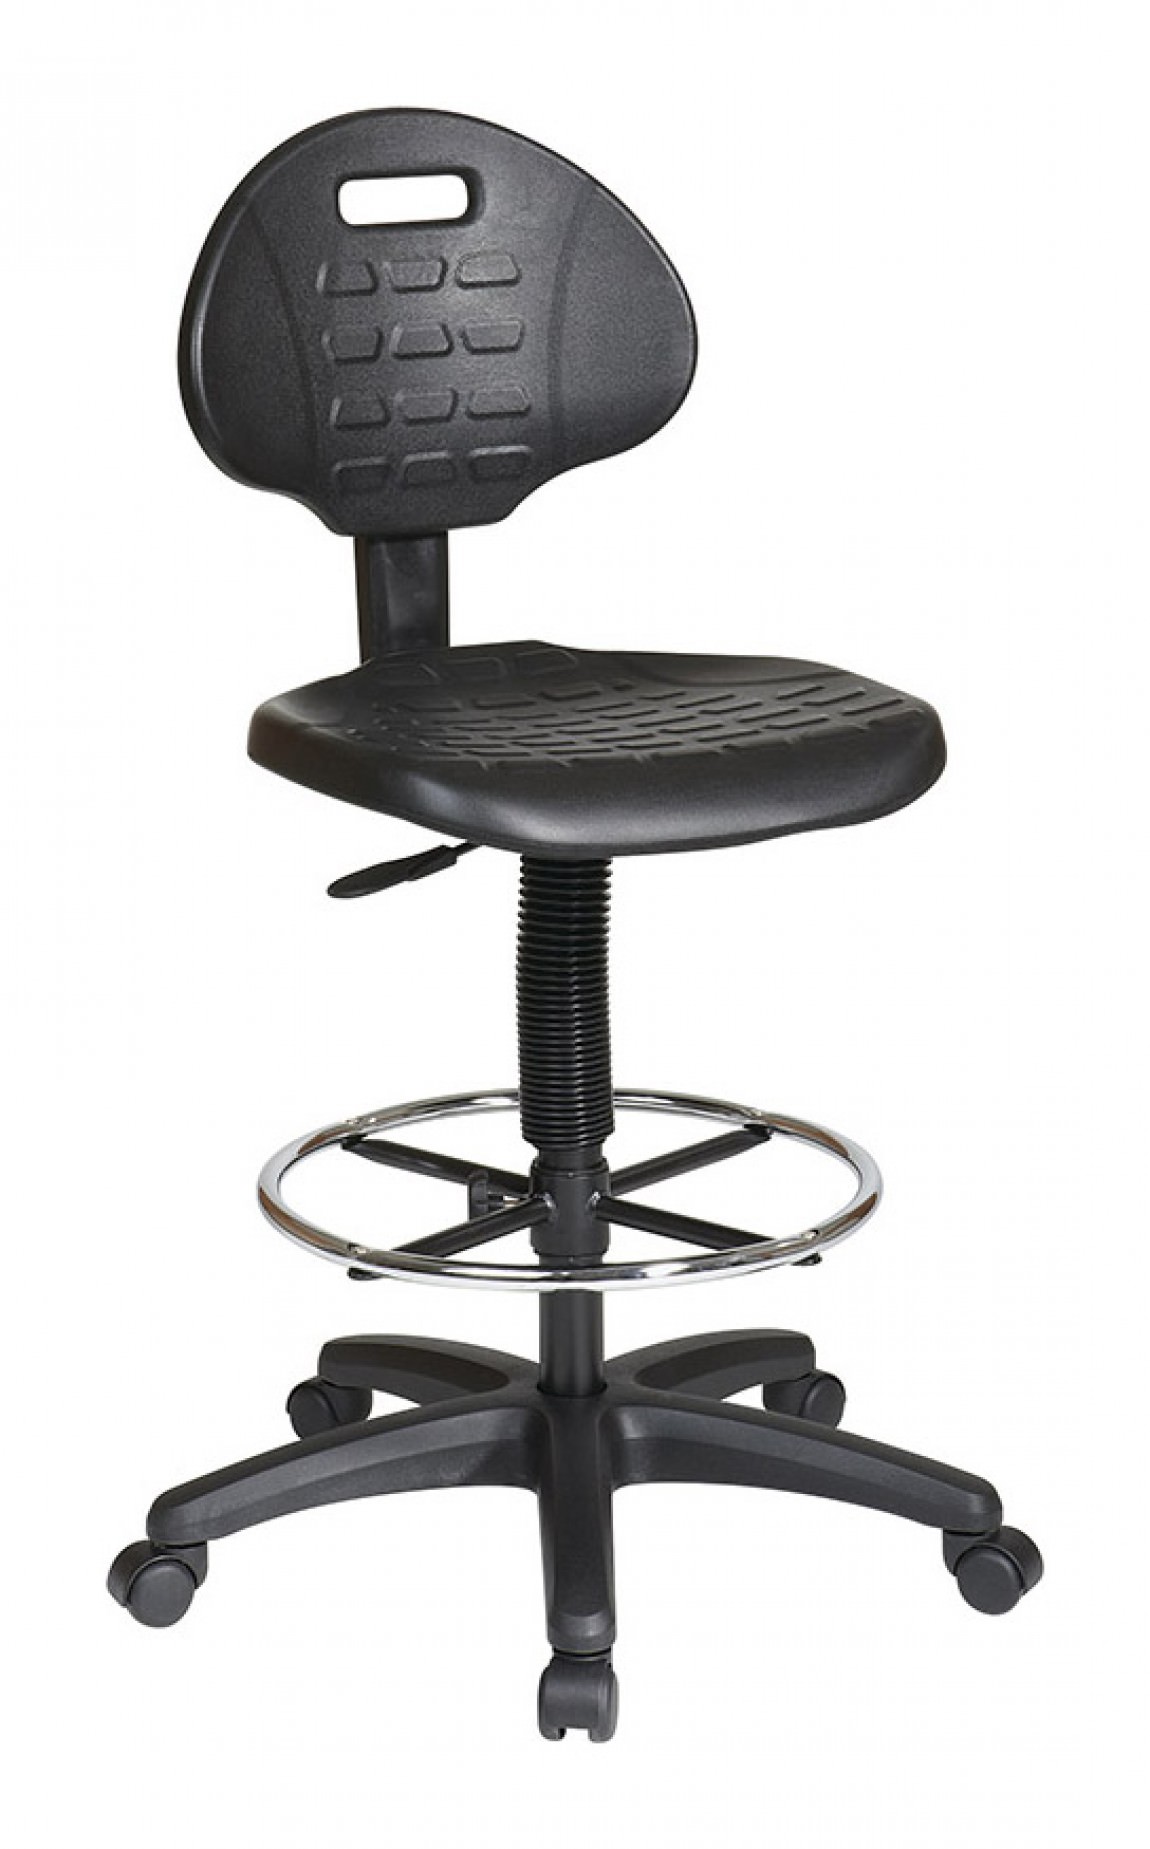 https://madisonliquidators.com/images/p/1150/24864--drafting-chair-with-footrest-1.jpg